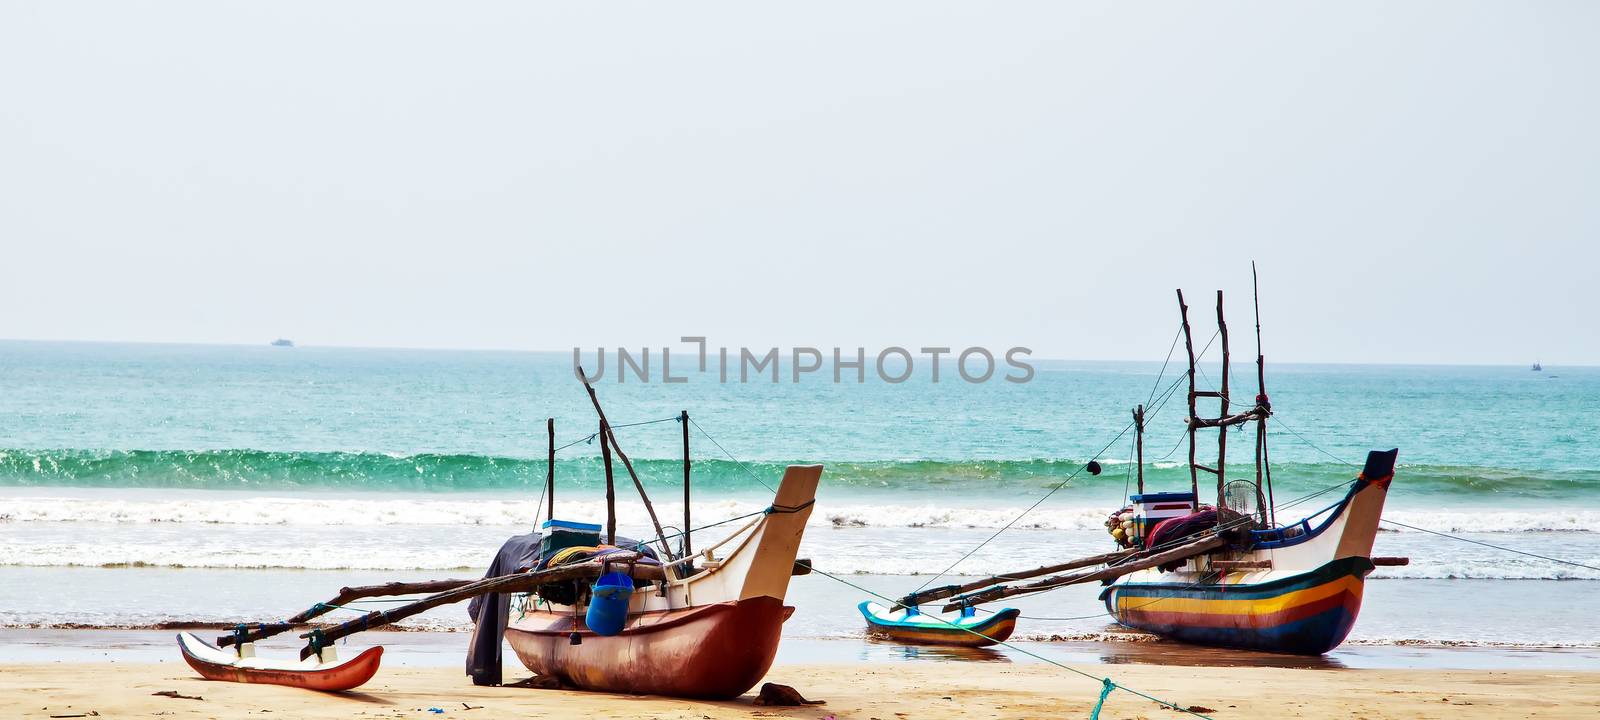 OLD traditional fishing catamarans, Colorful fishing boats on a long sandy beach on the ocean coast of Sri Lanka. Popular landmark fishing Ceylon village.